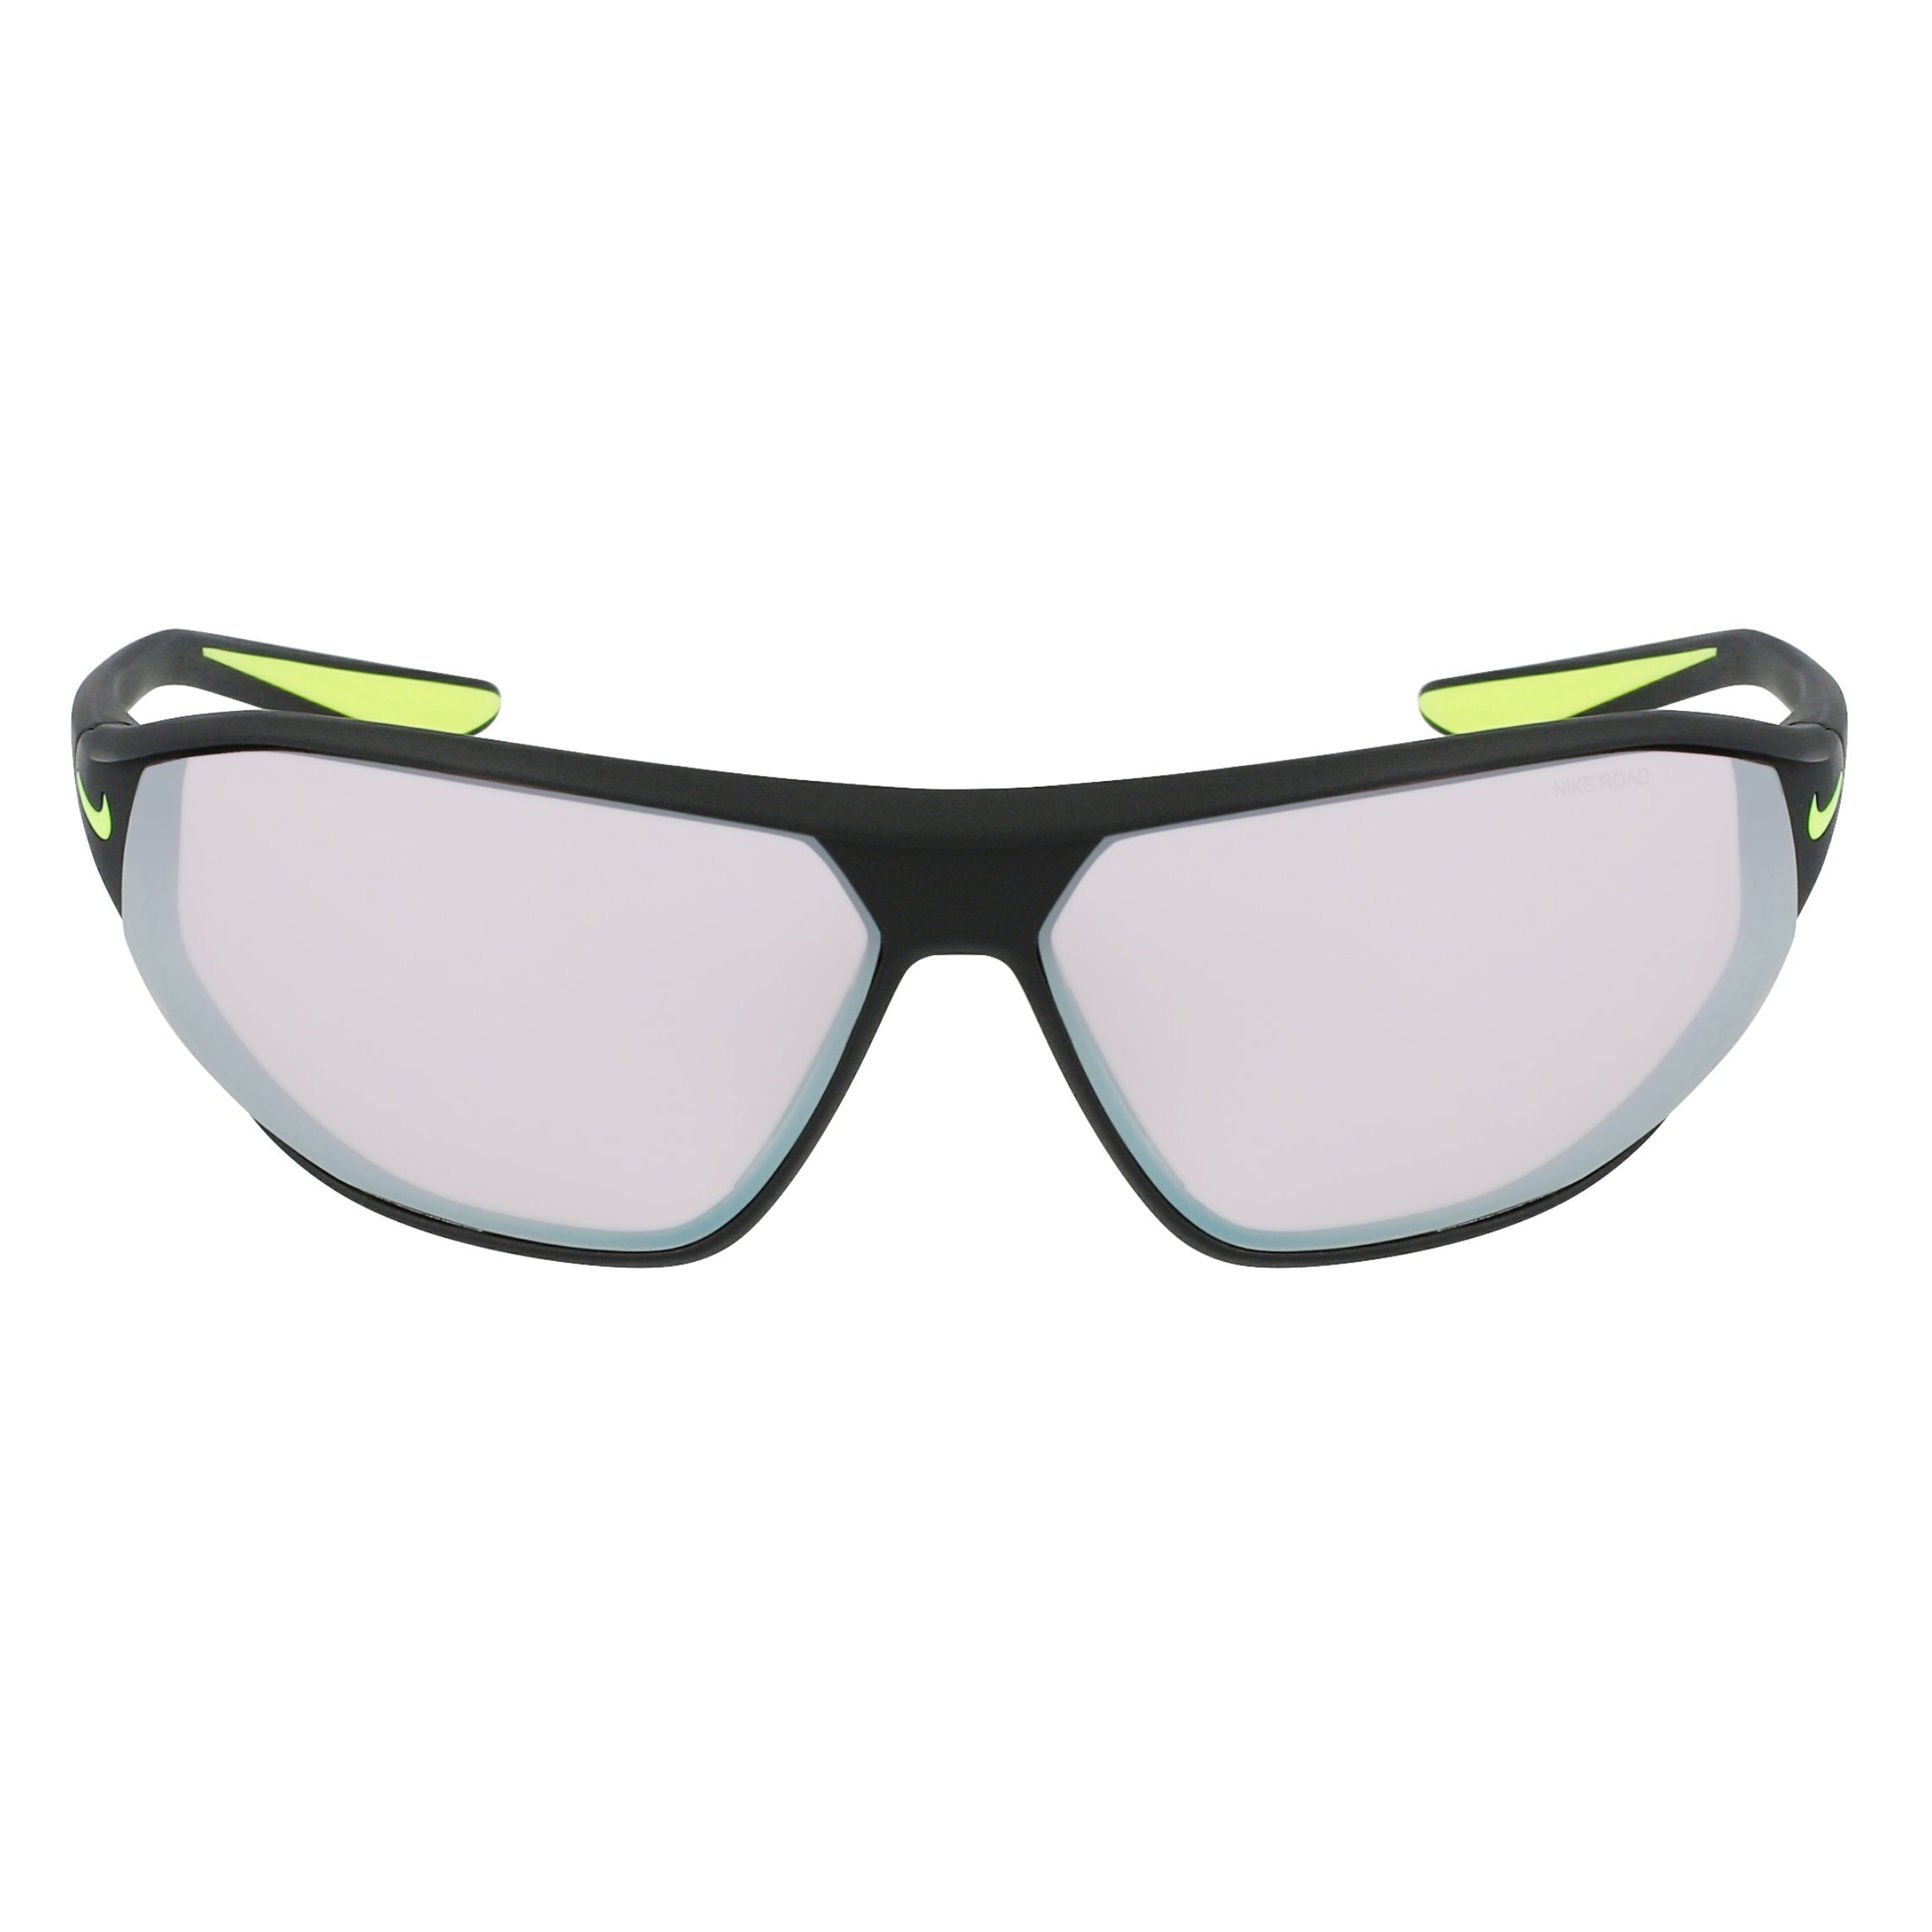 Nike Sunglasses Aero Swift Black/Volt/Road Tint Lens